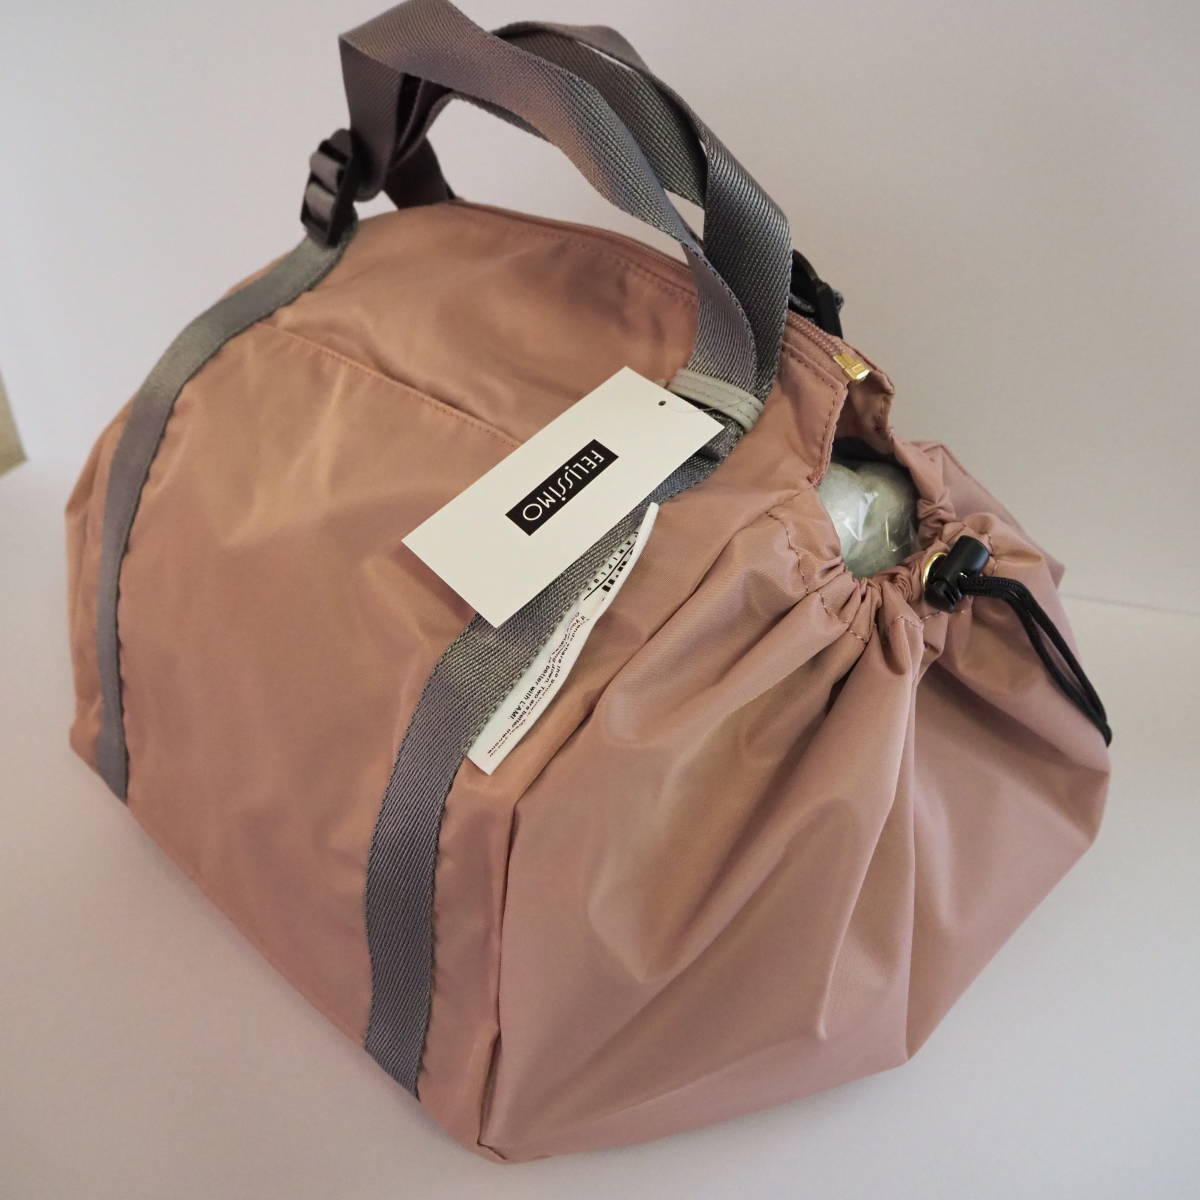  Ferrie simo* новый товар 3 -цветный набор * обычная цена 12870 иен reji корзина рюкзак яркий цвет 3 вид эко-сумка reji корзина сумка рюкзак 